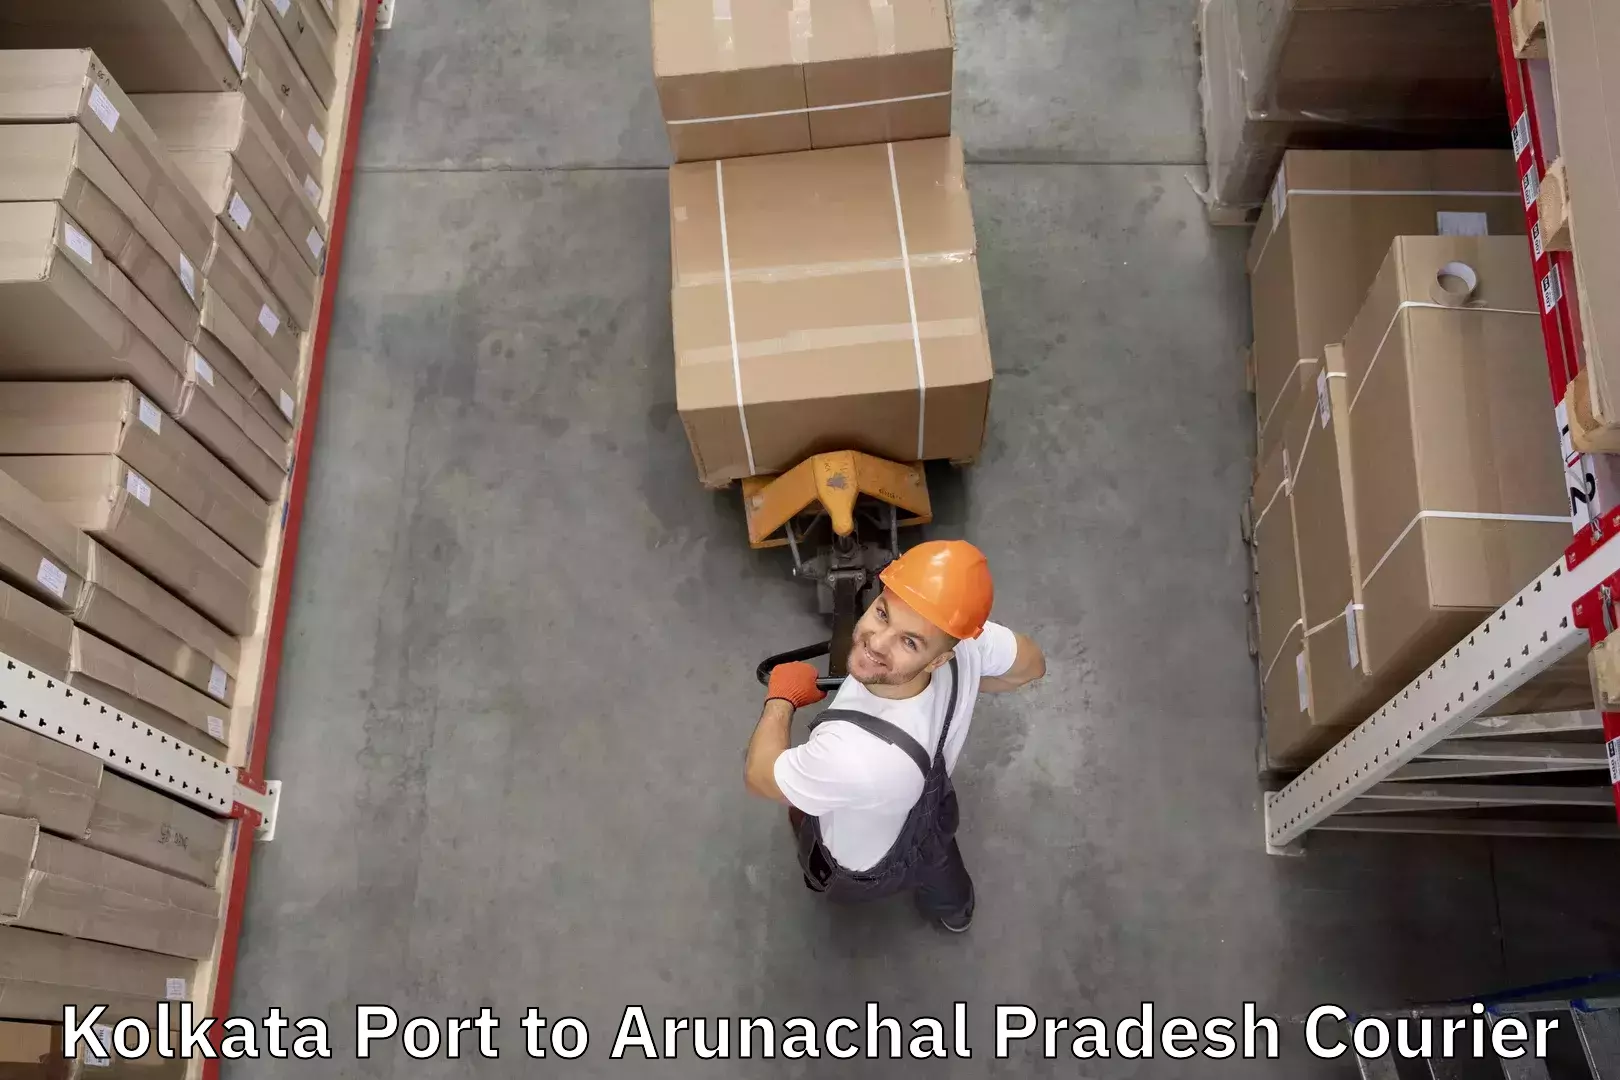 Luggage shipment tracking in Kolkata Port to Lower Subansiri